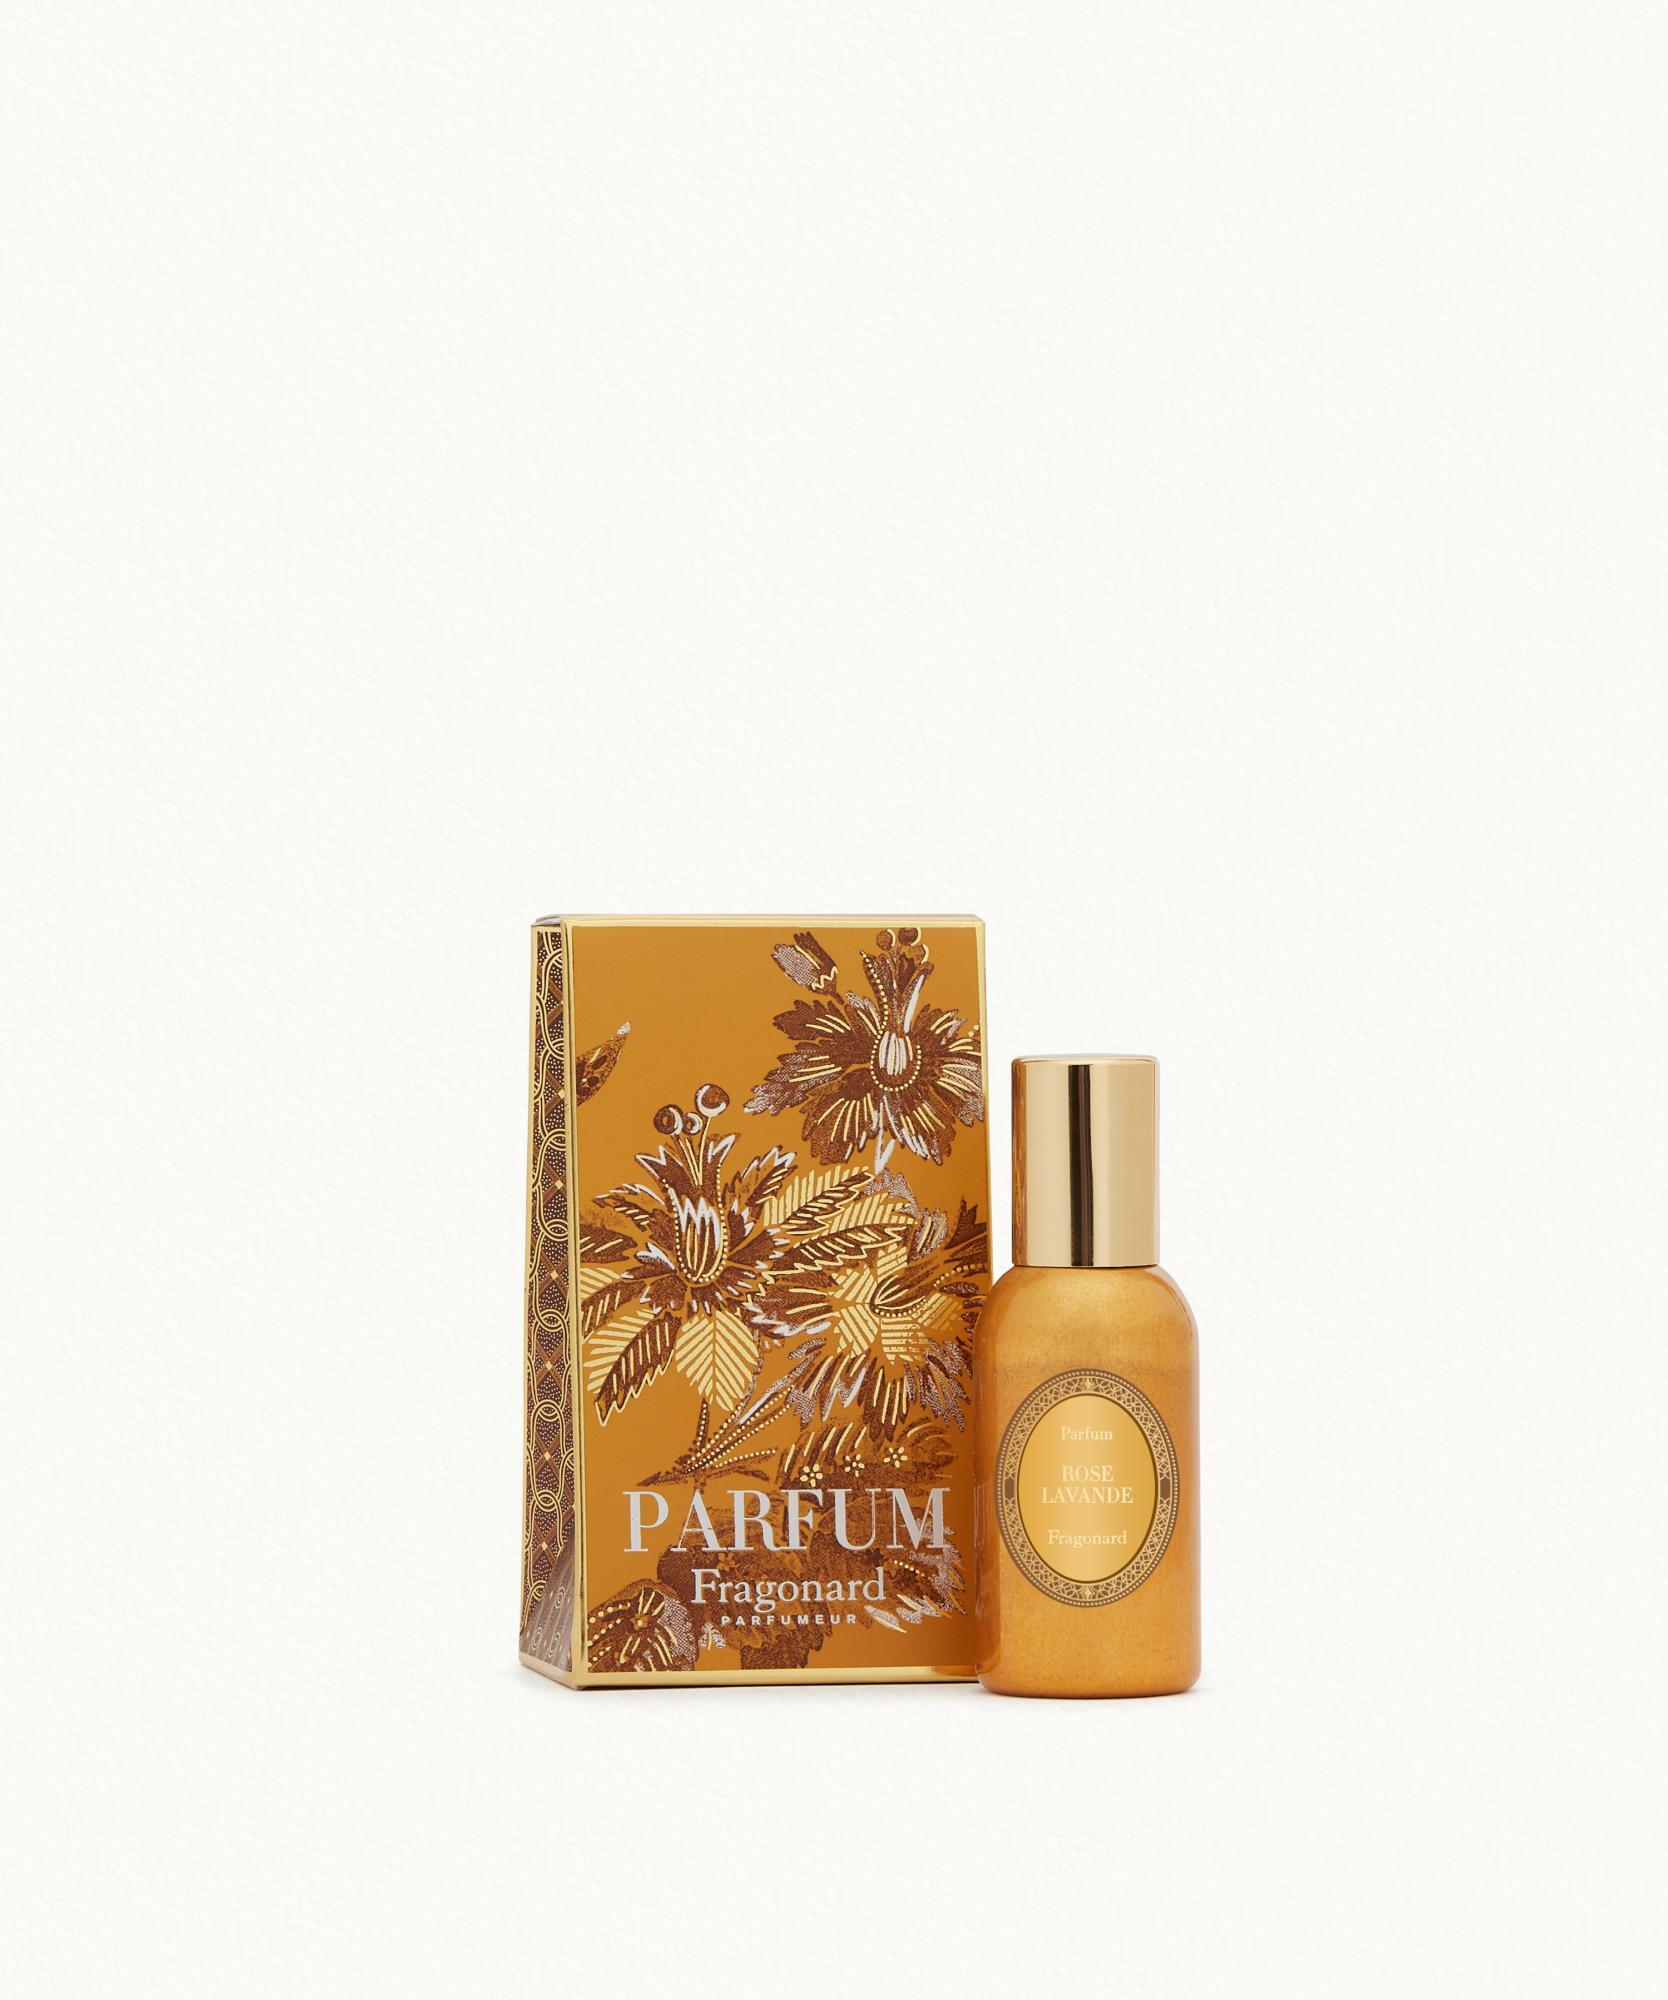 Rose Lavande Perfume 60ml Fragonard - $ 99.00